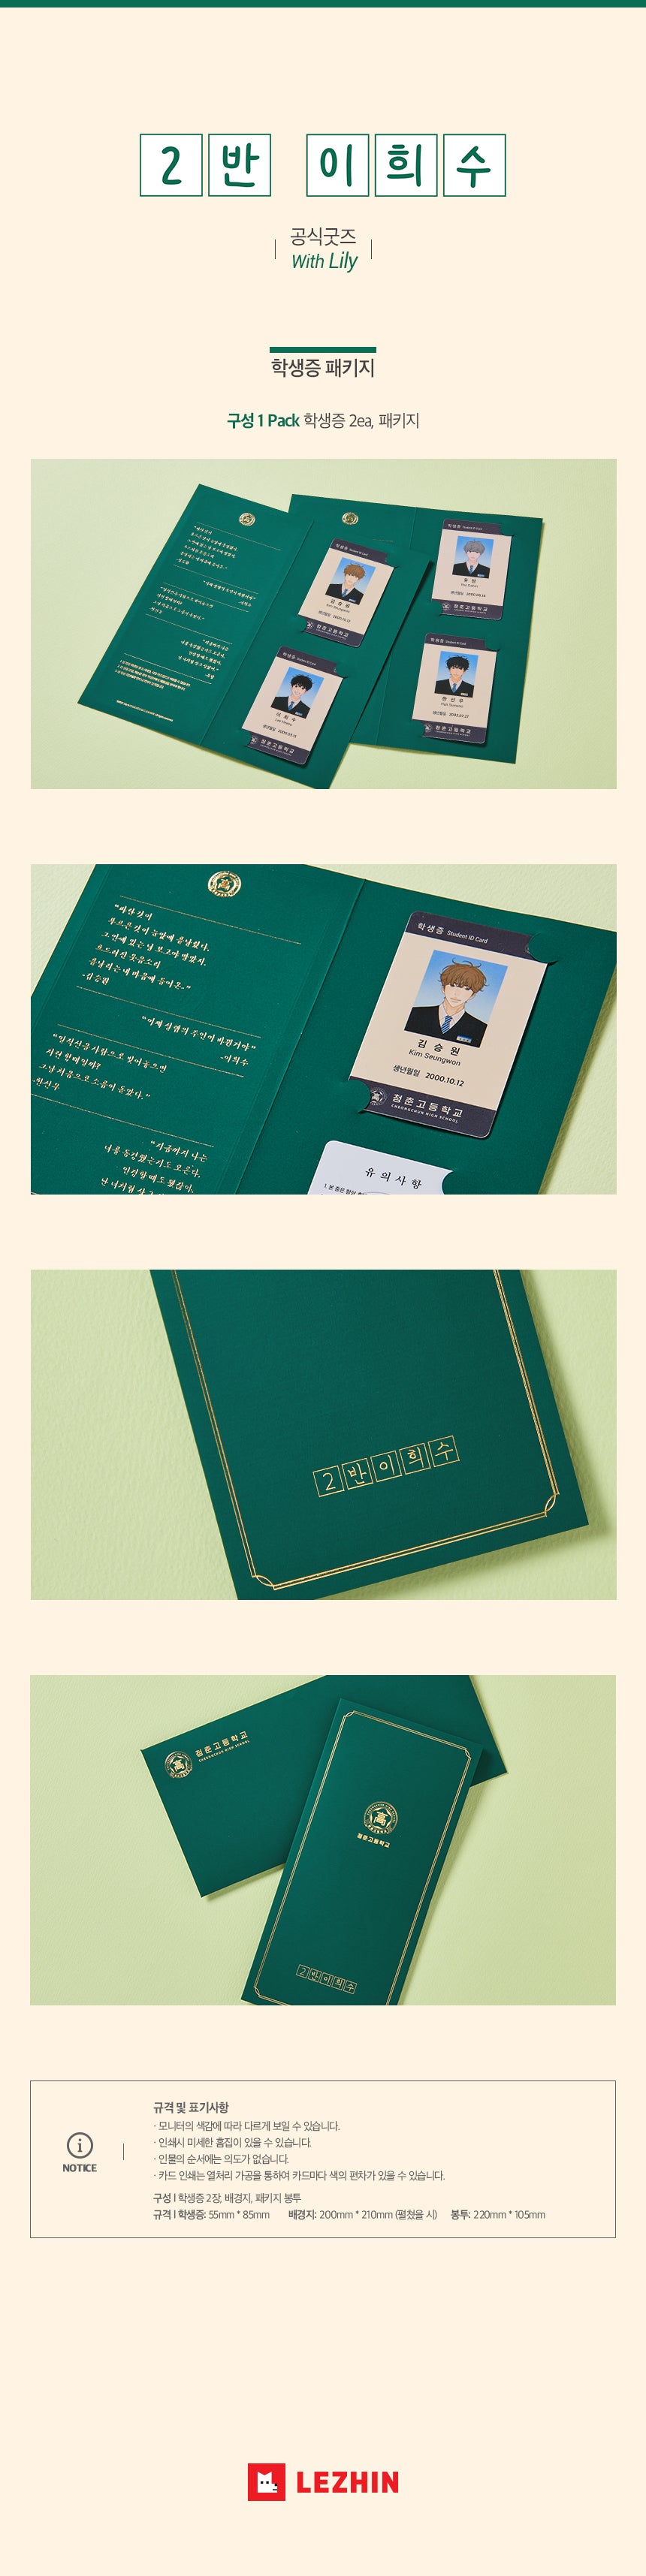 2nd Class Lee Hee Soo - Student ID Card Package